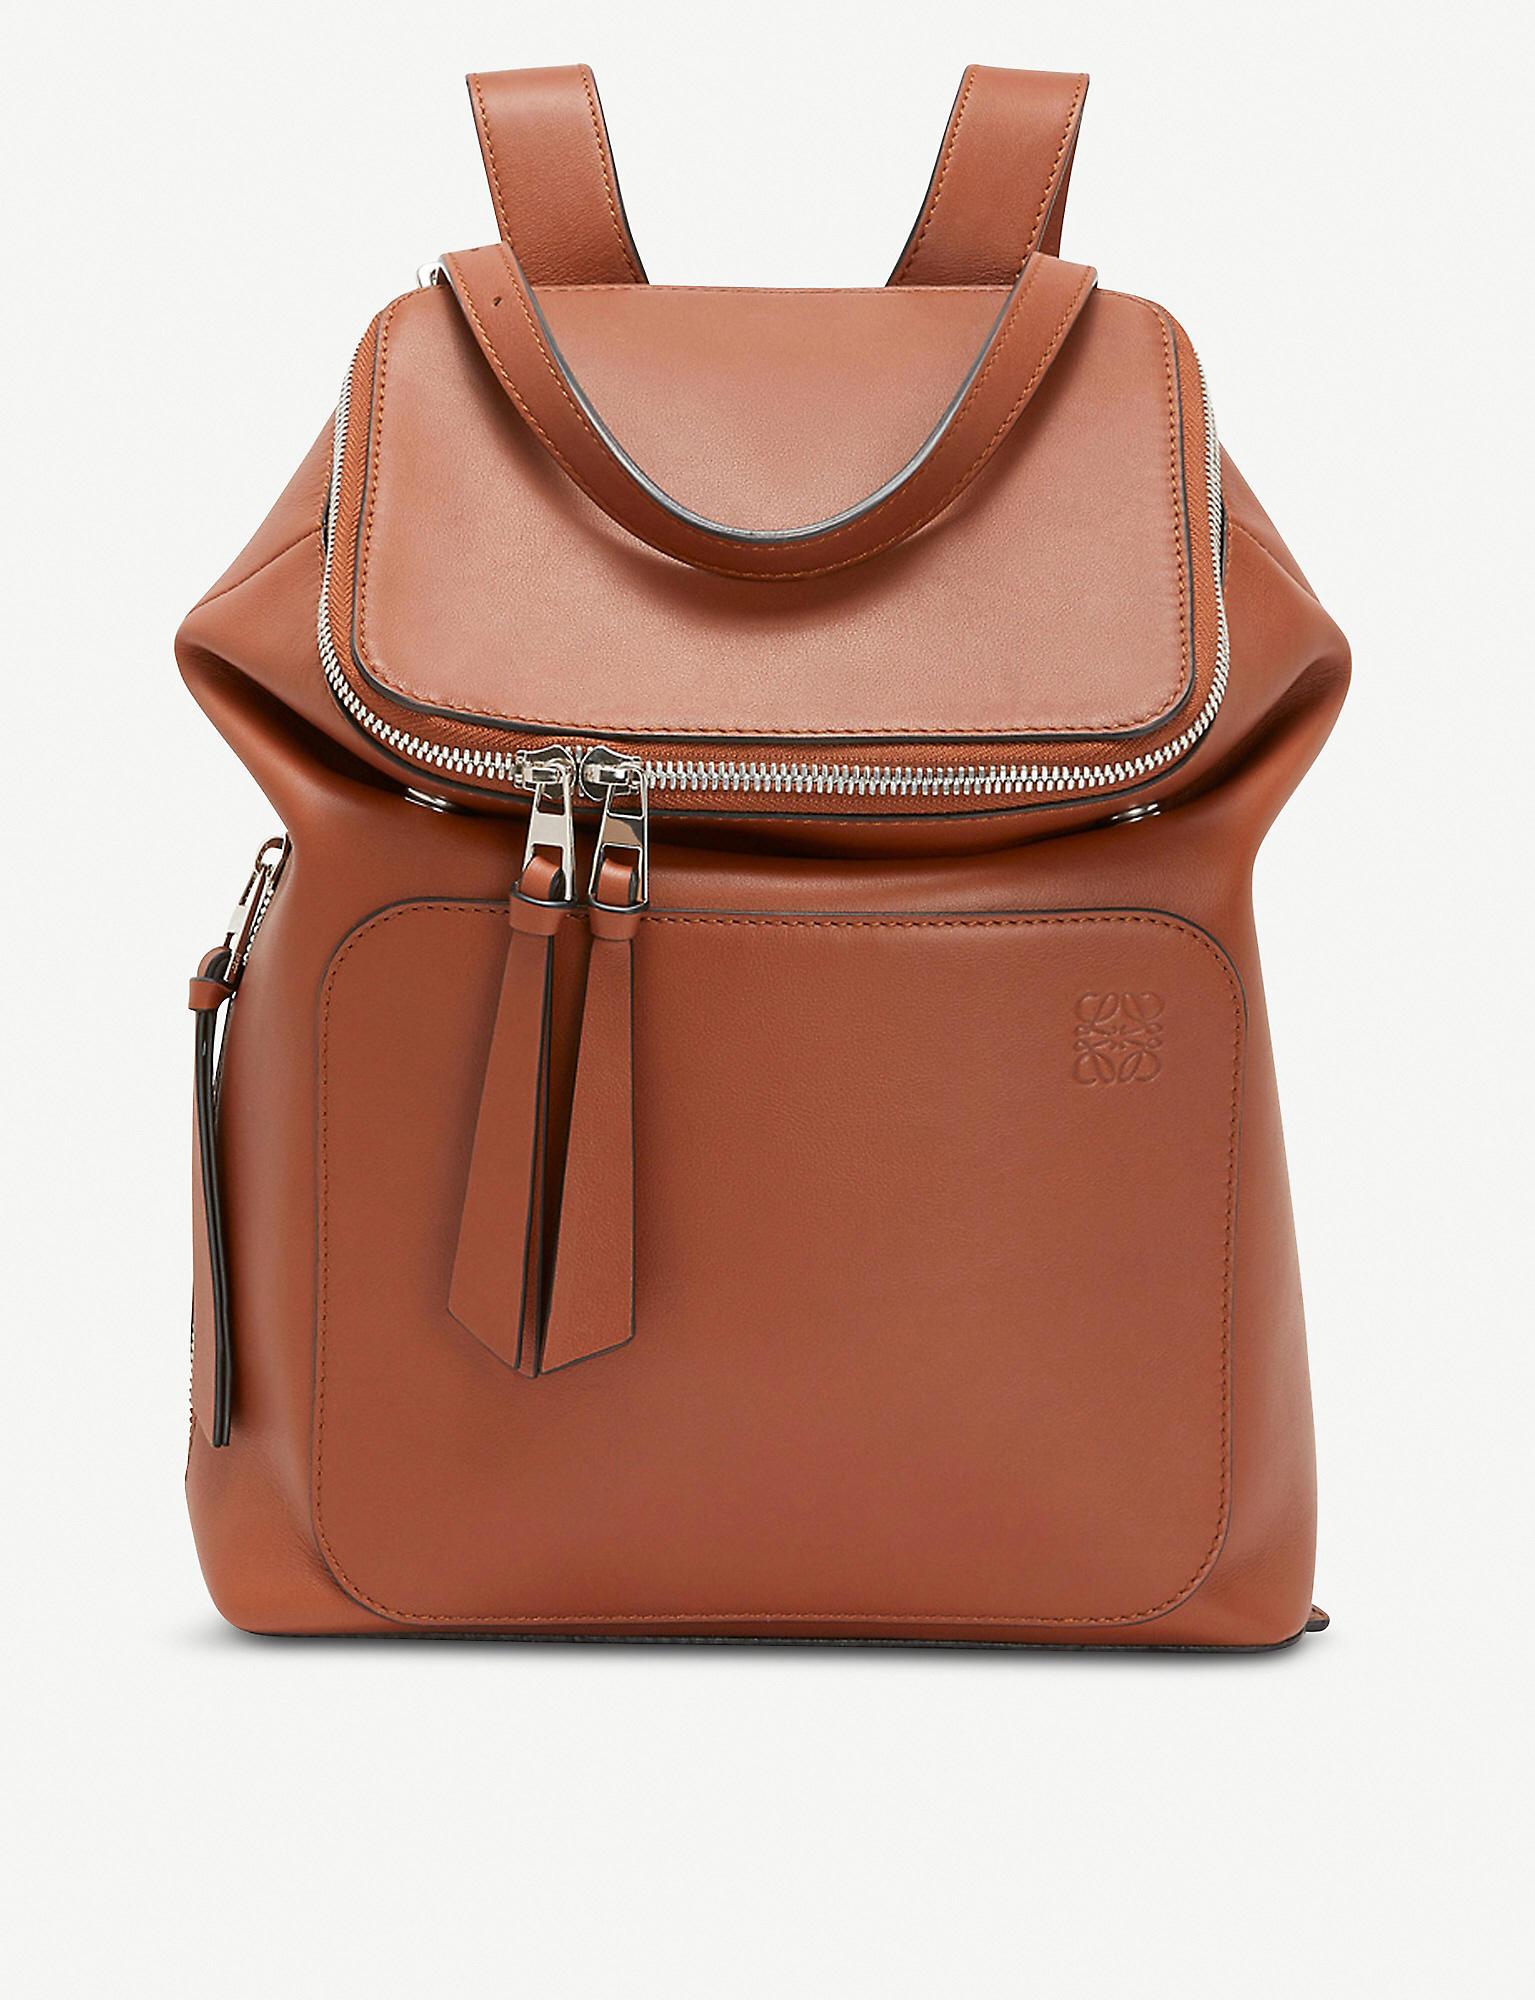 Loewe Goya Small Leather Backpack in Brown - Lyst